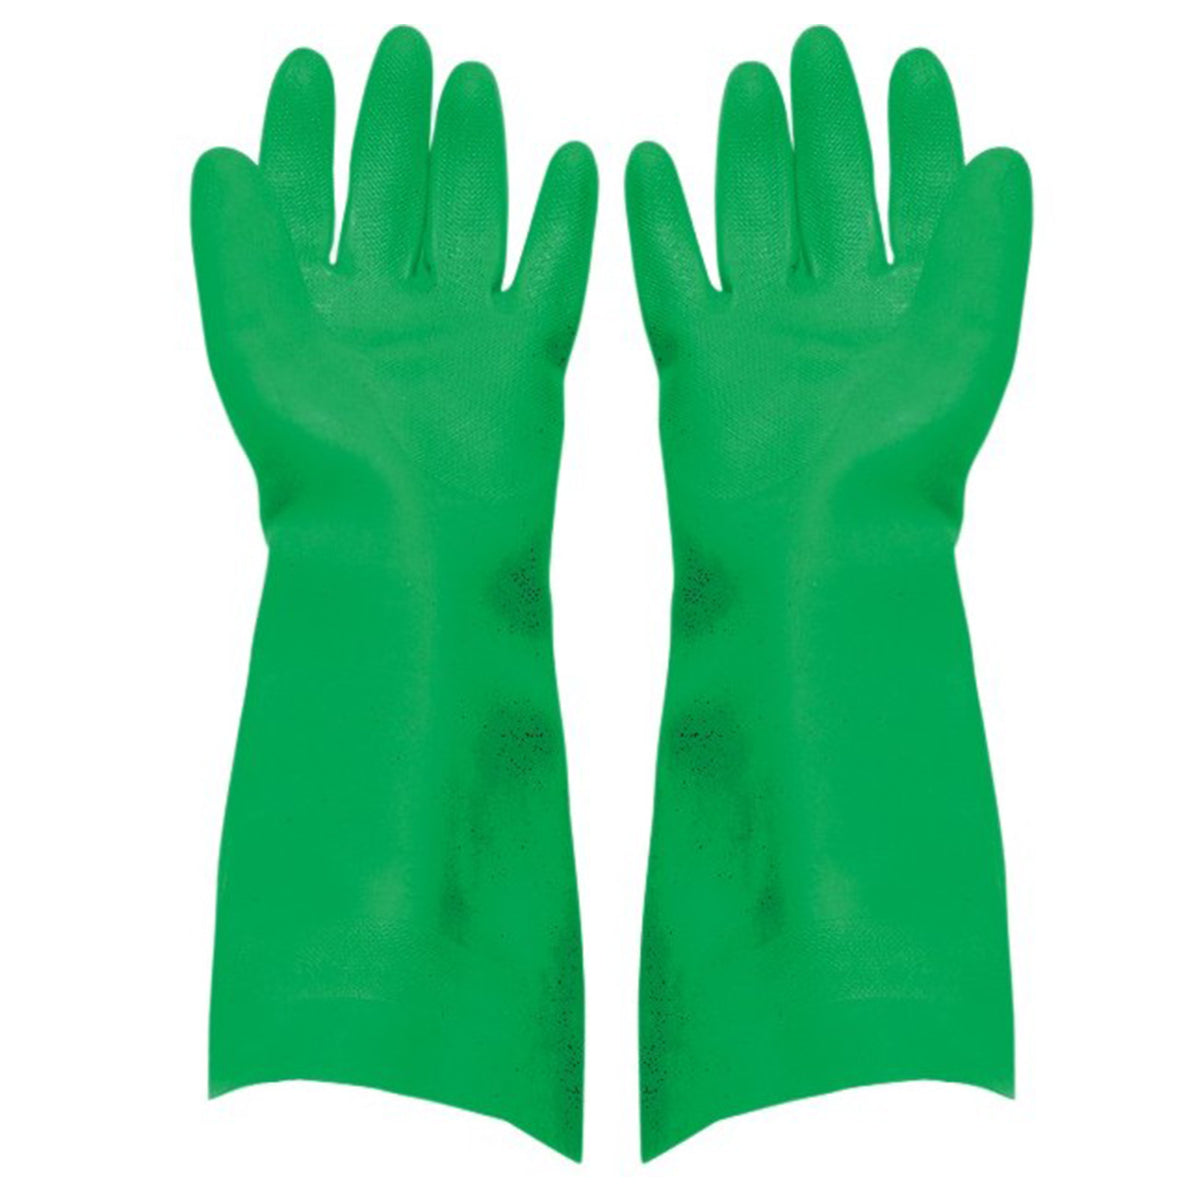 Nitrile Flock lined hand gloves